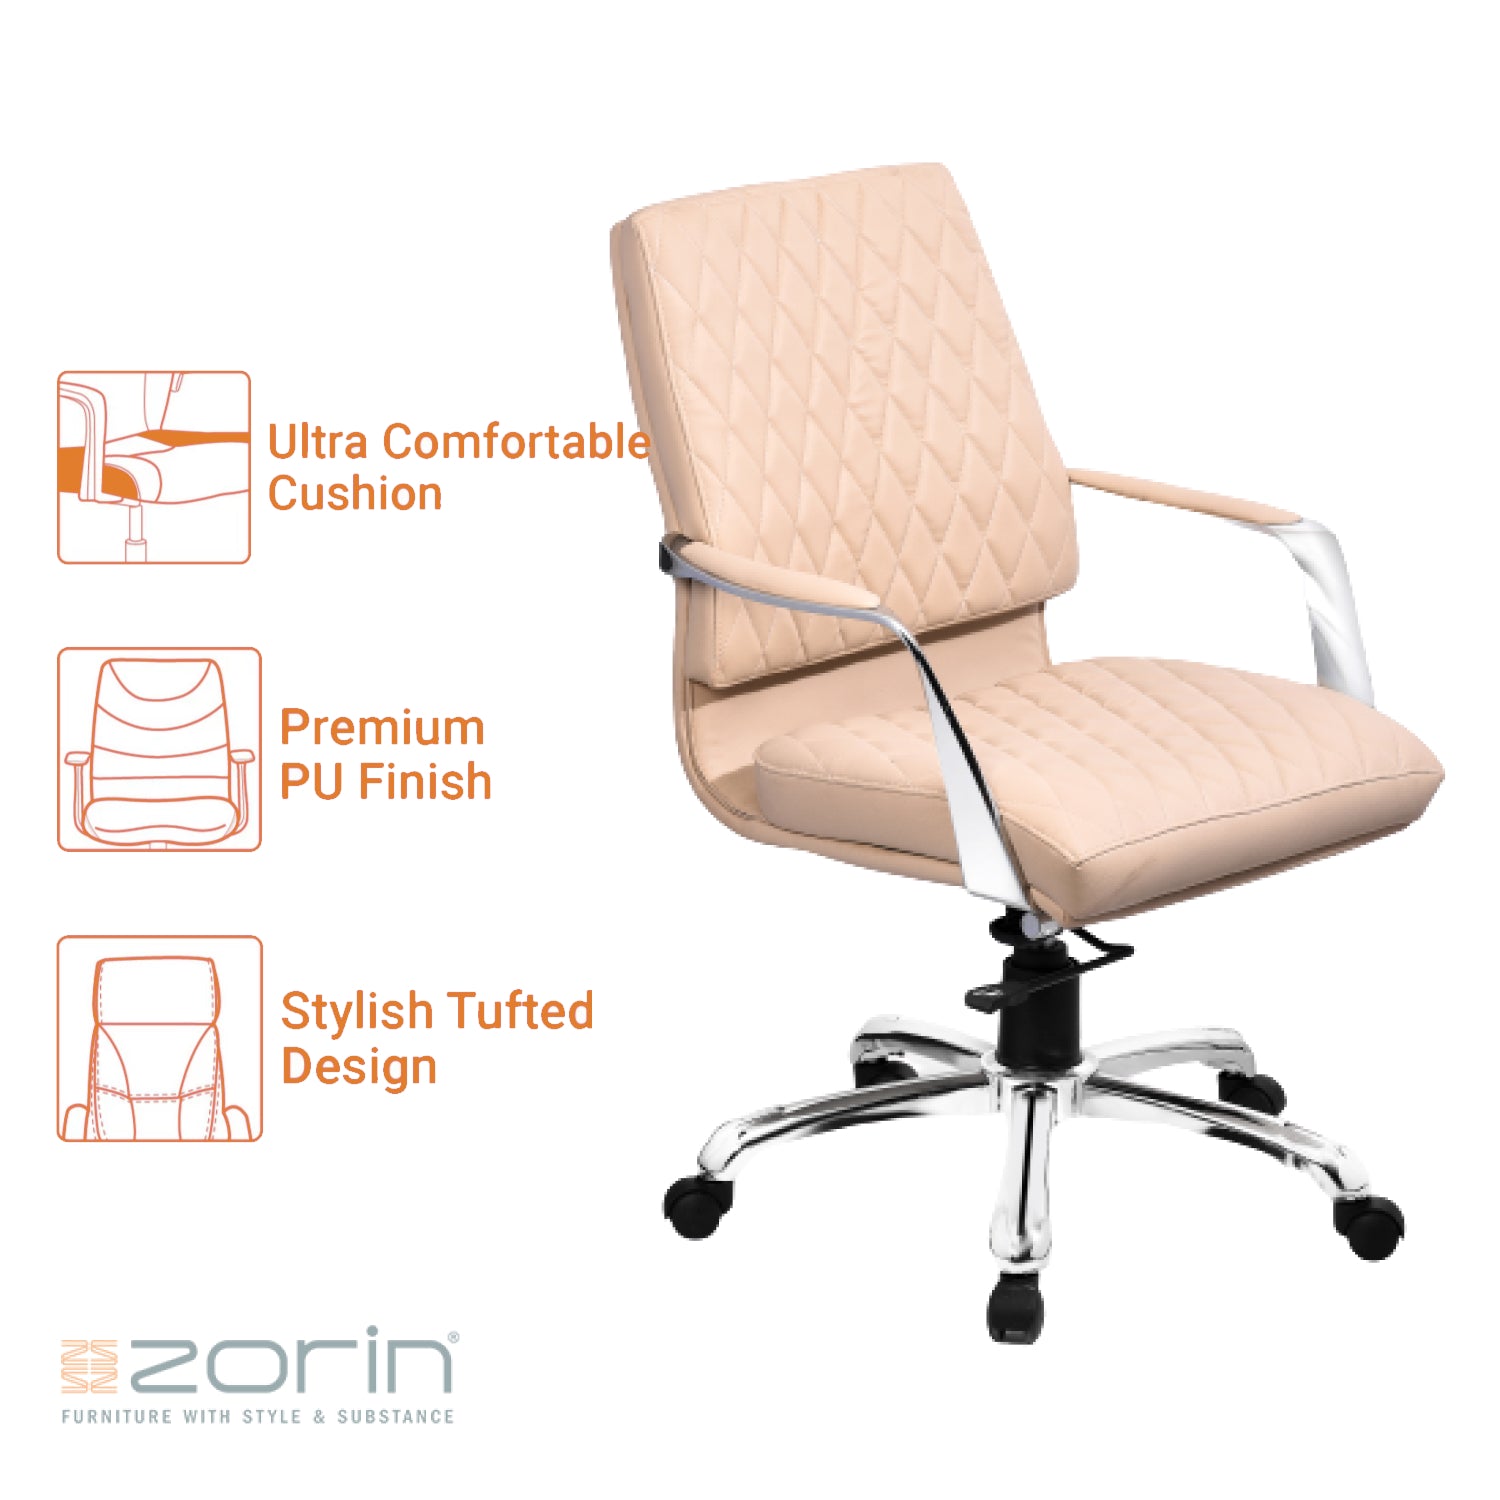 ZFD1010 Medium Back Chair by Zorin in Beige Color Zorin